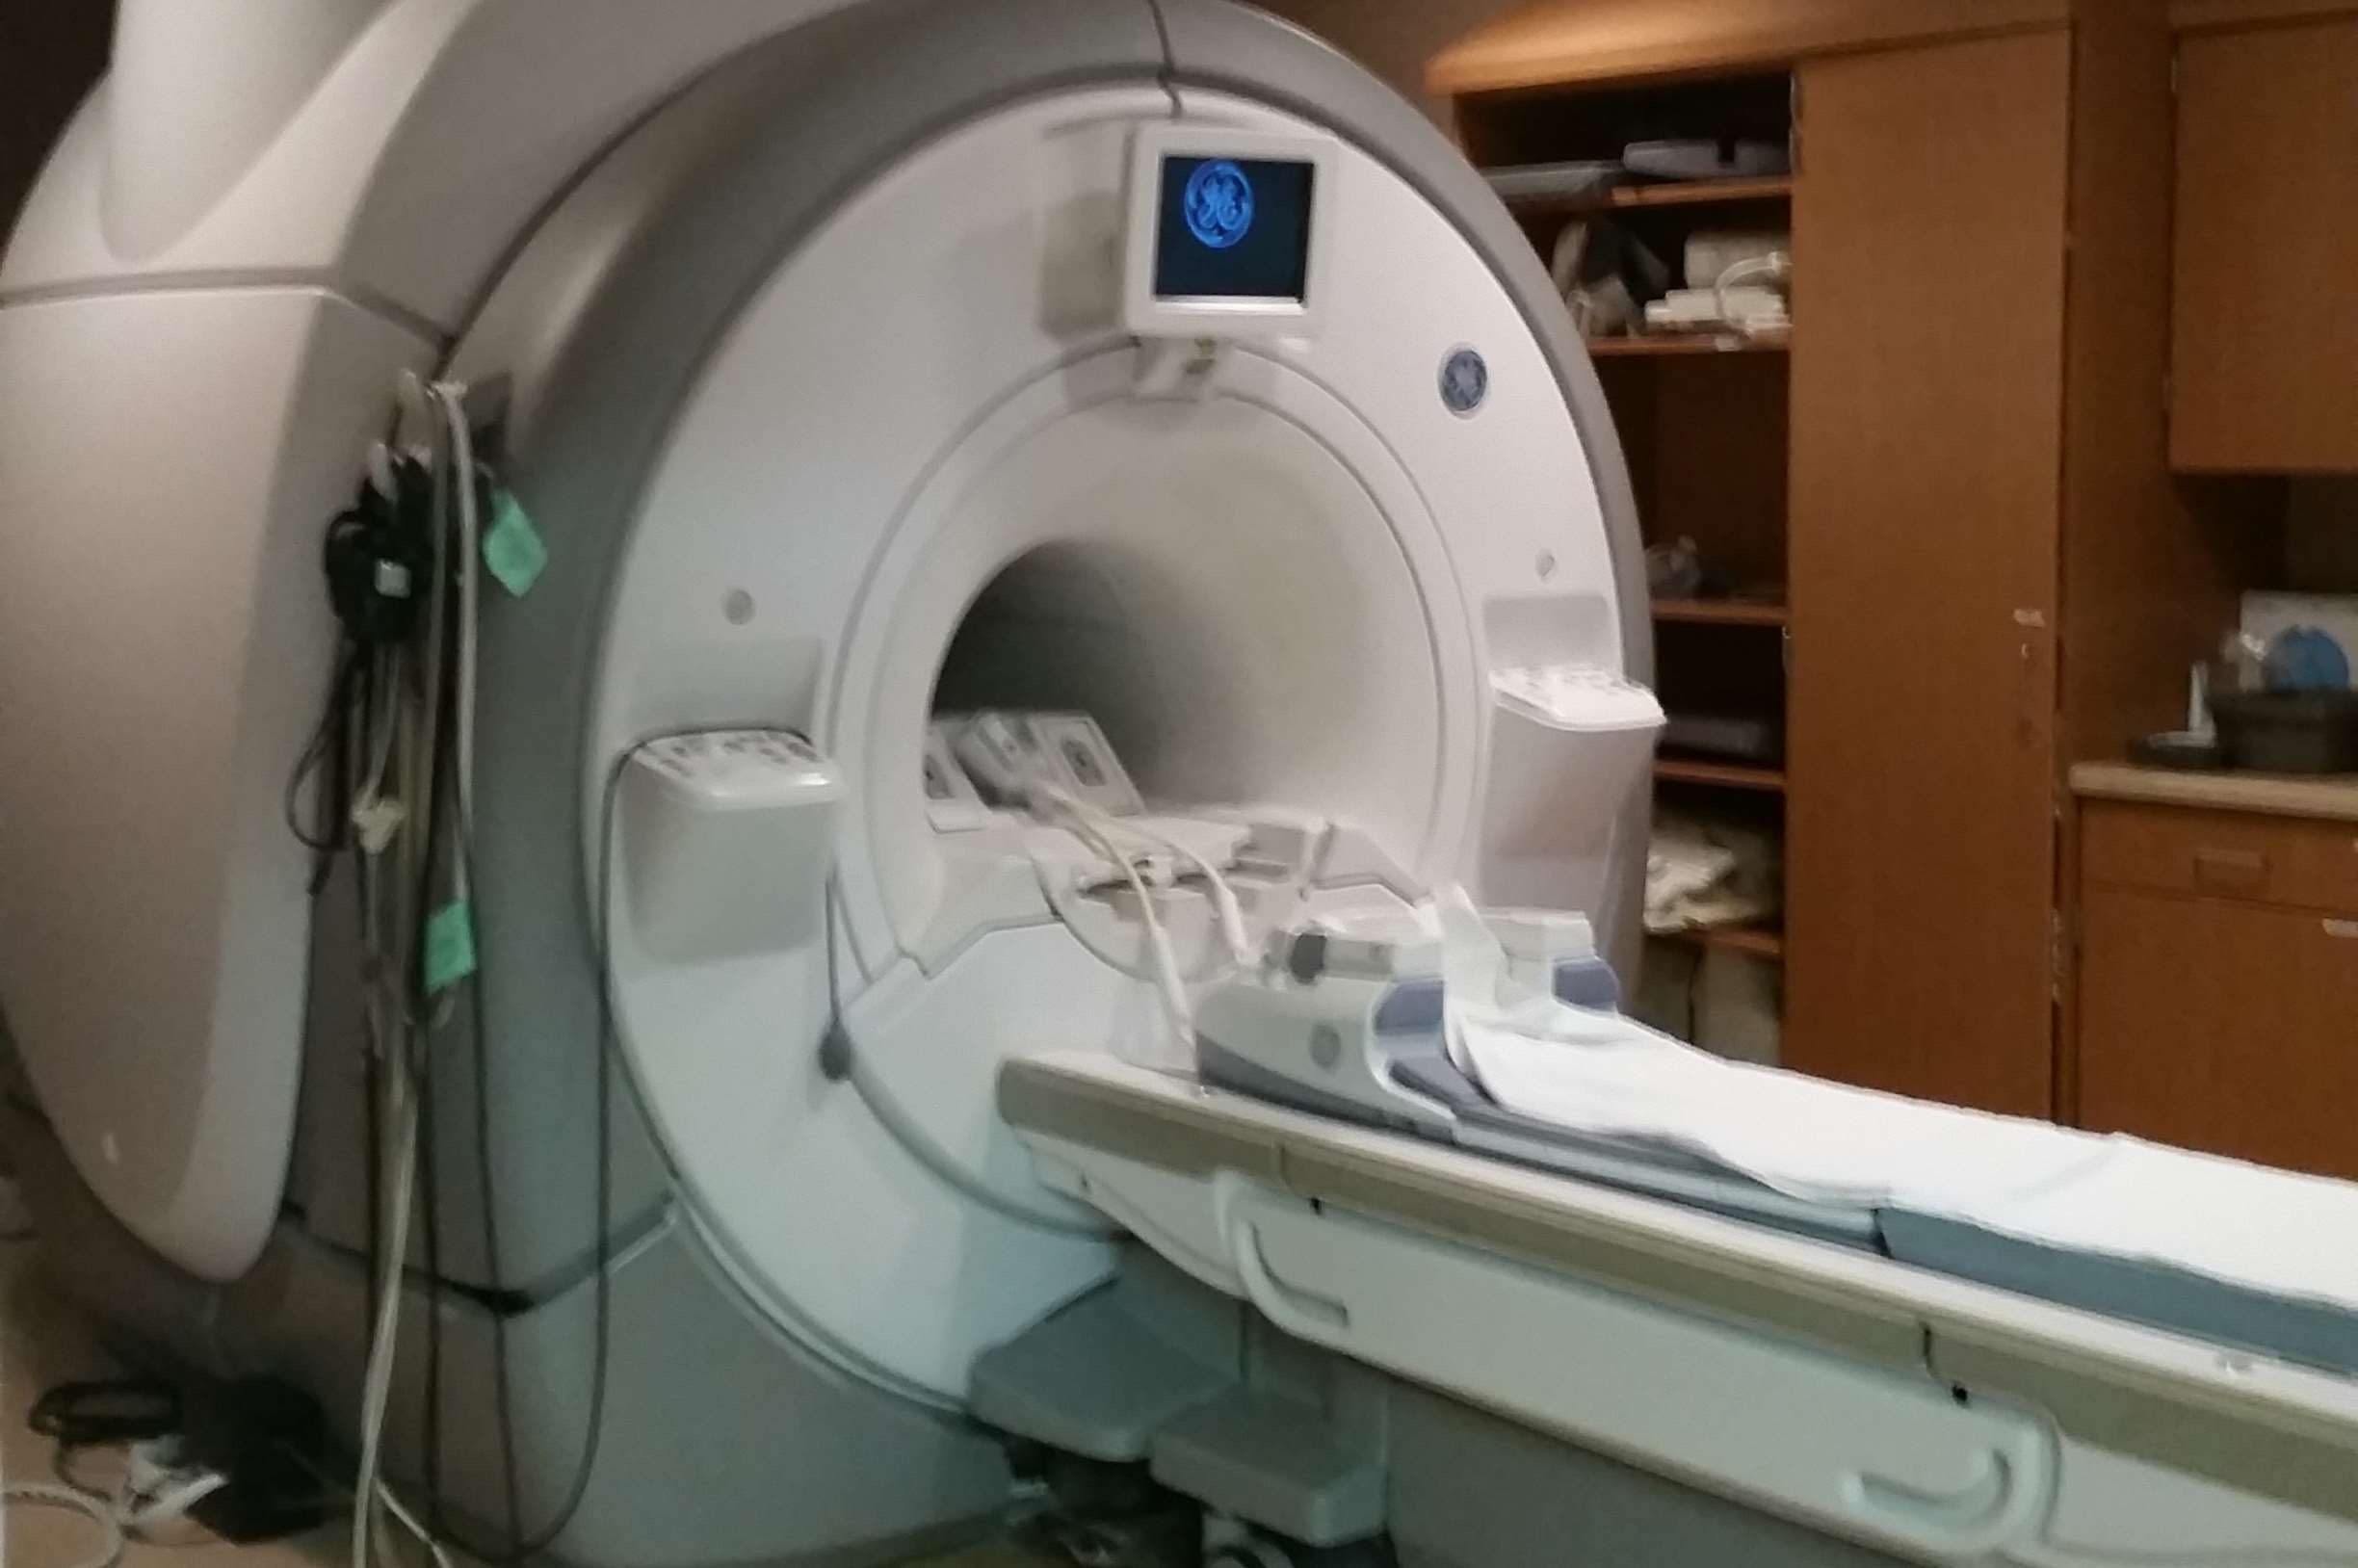 MRI imaging equipment